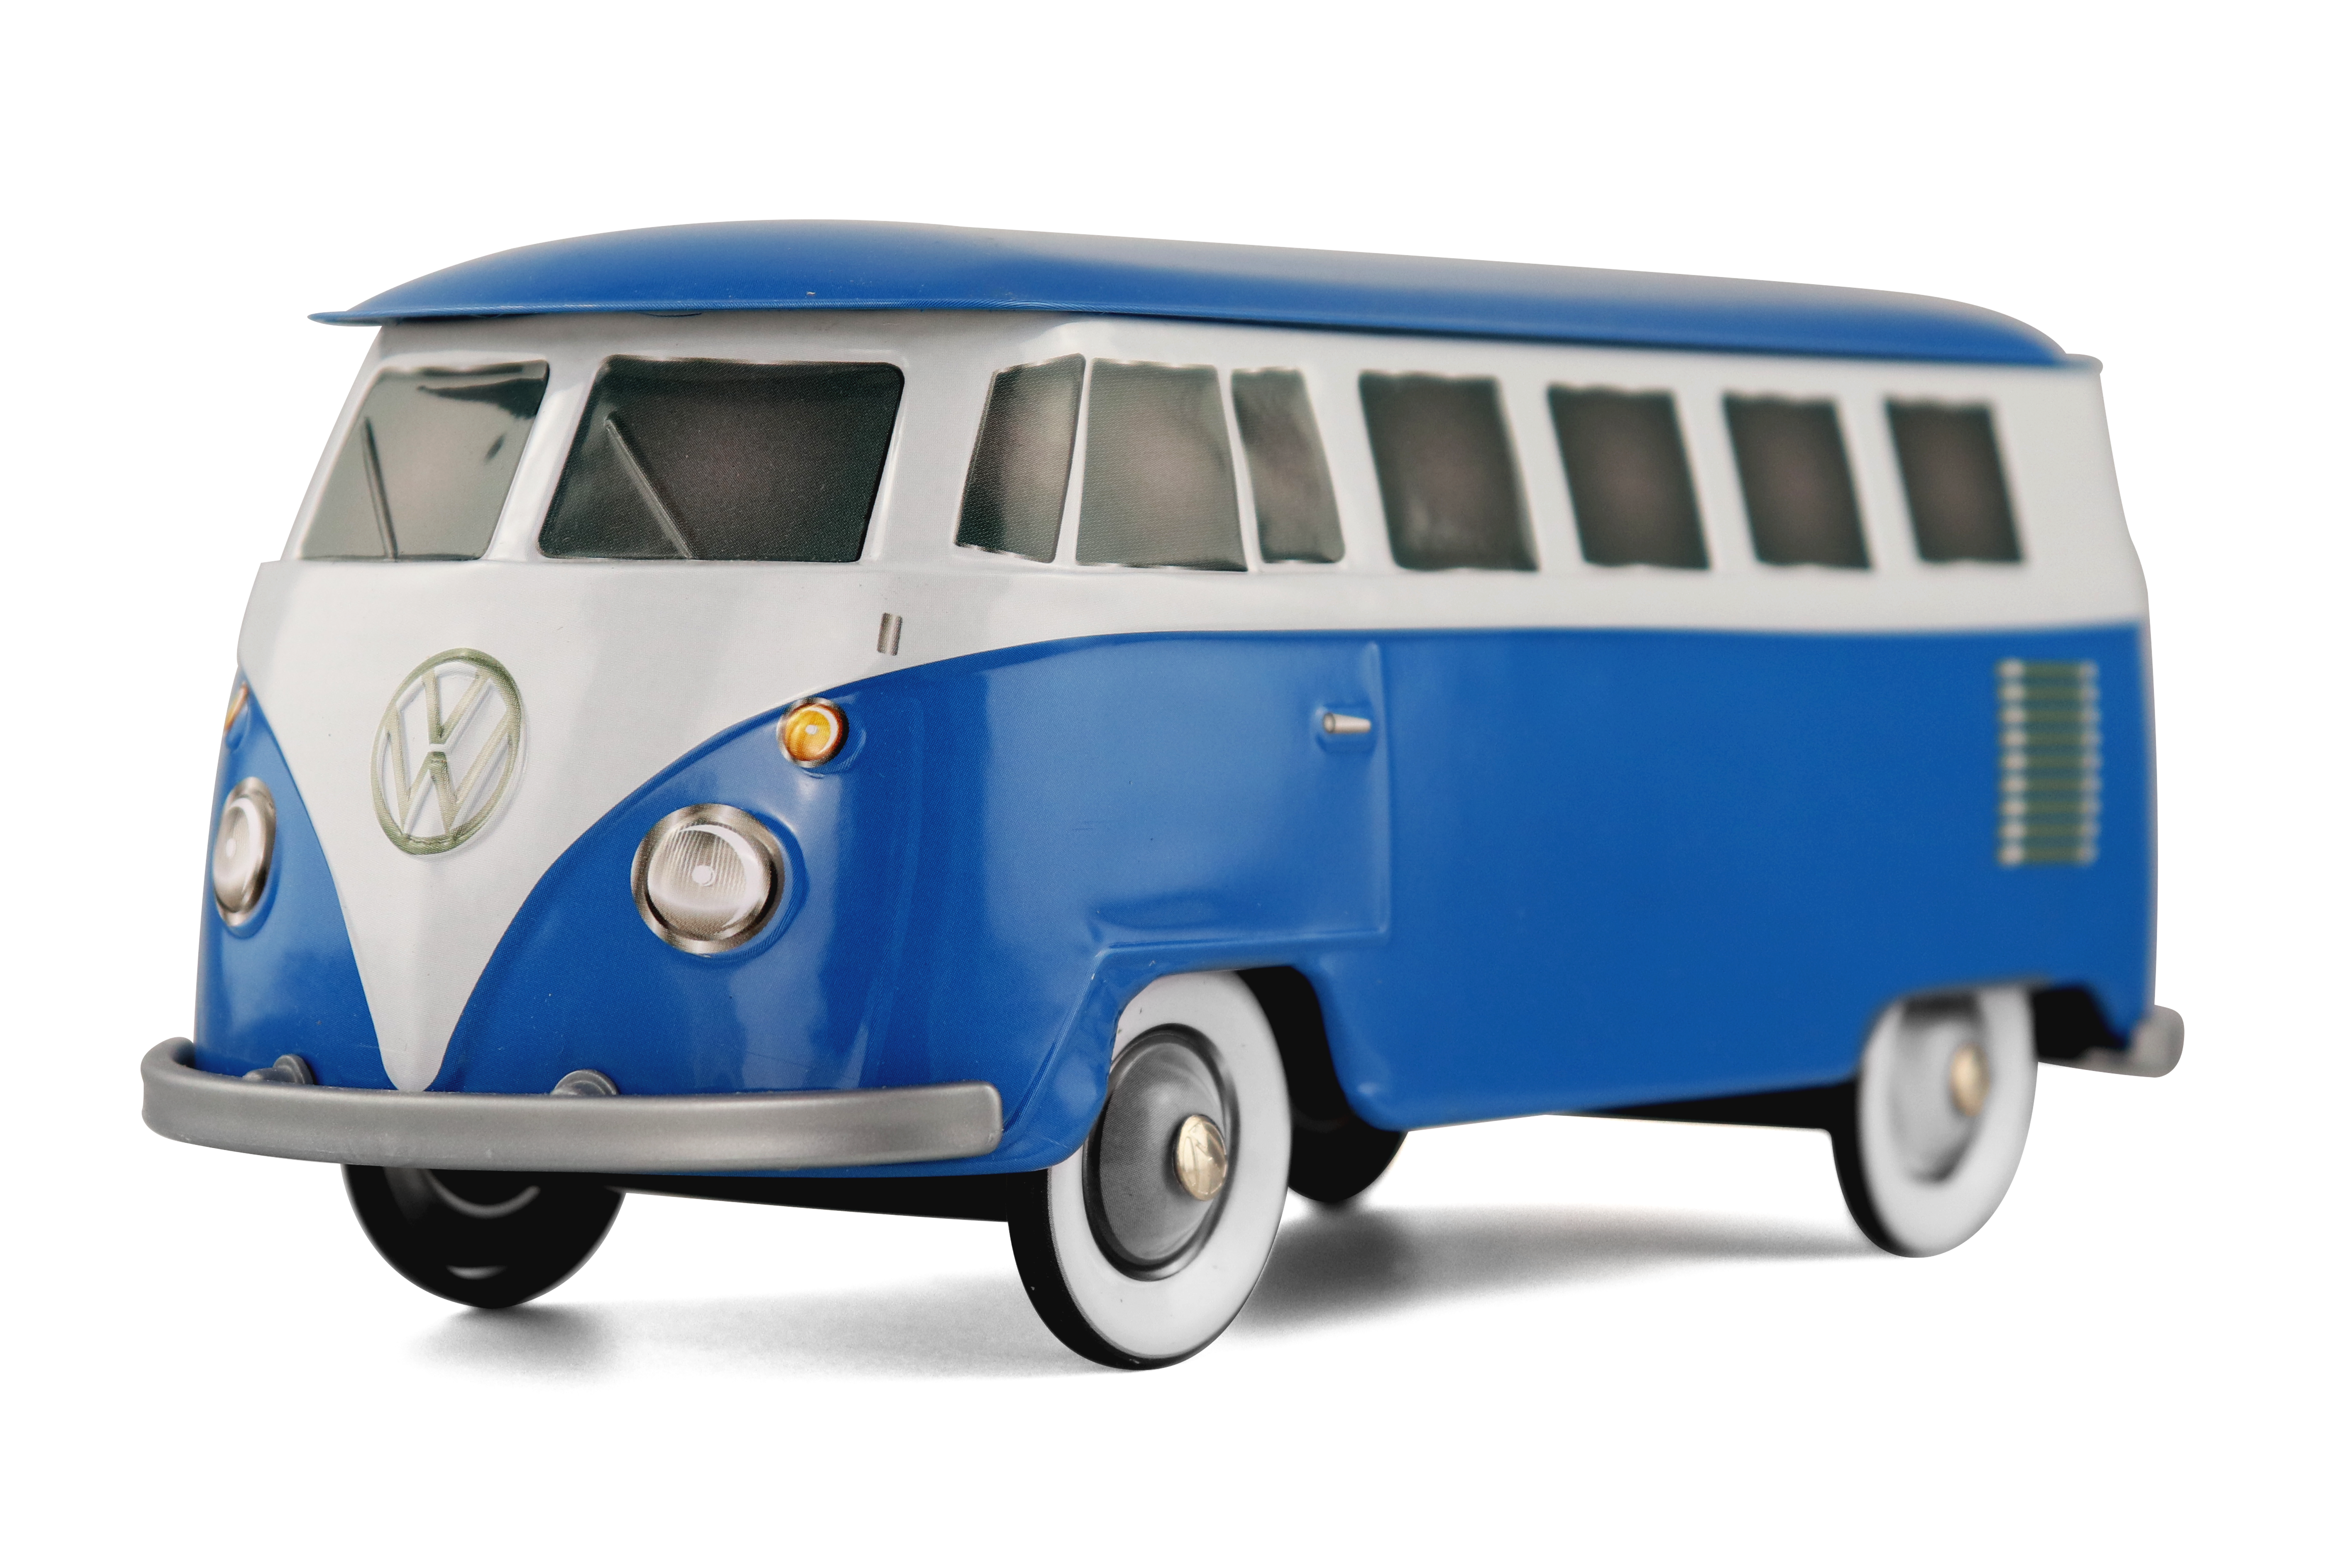 Combi VW Bleu-Gris - CHRISTIAN DELORME S.A.S. - Design packaging